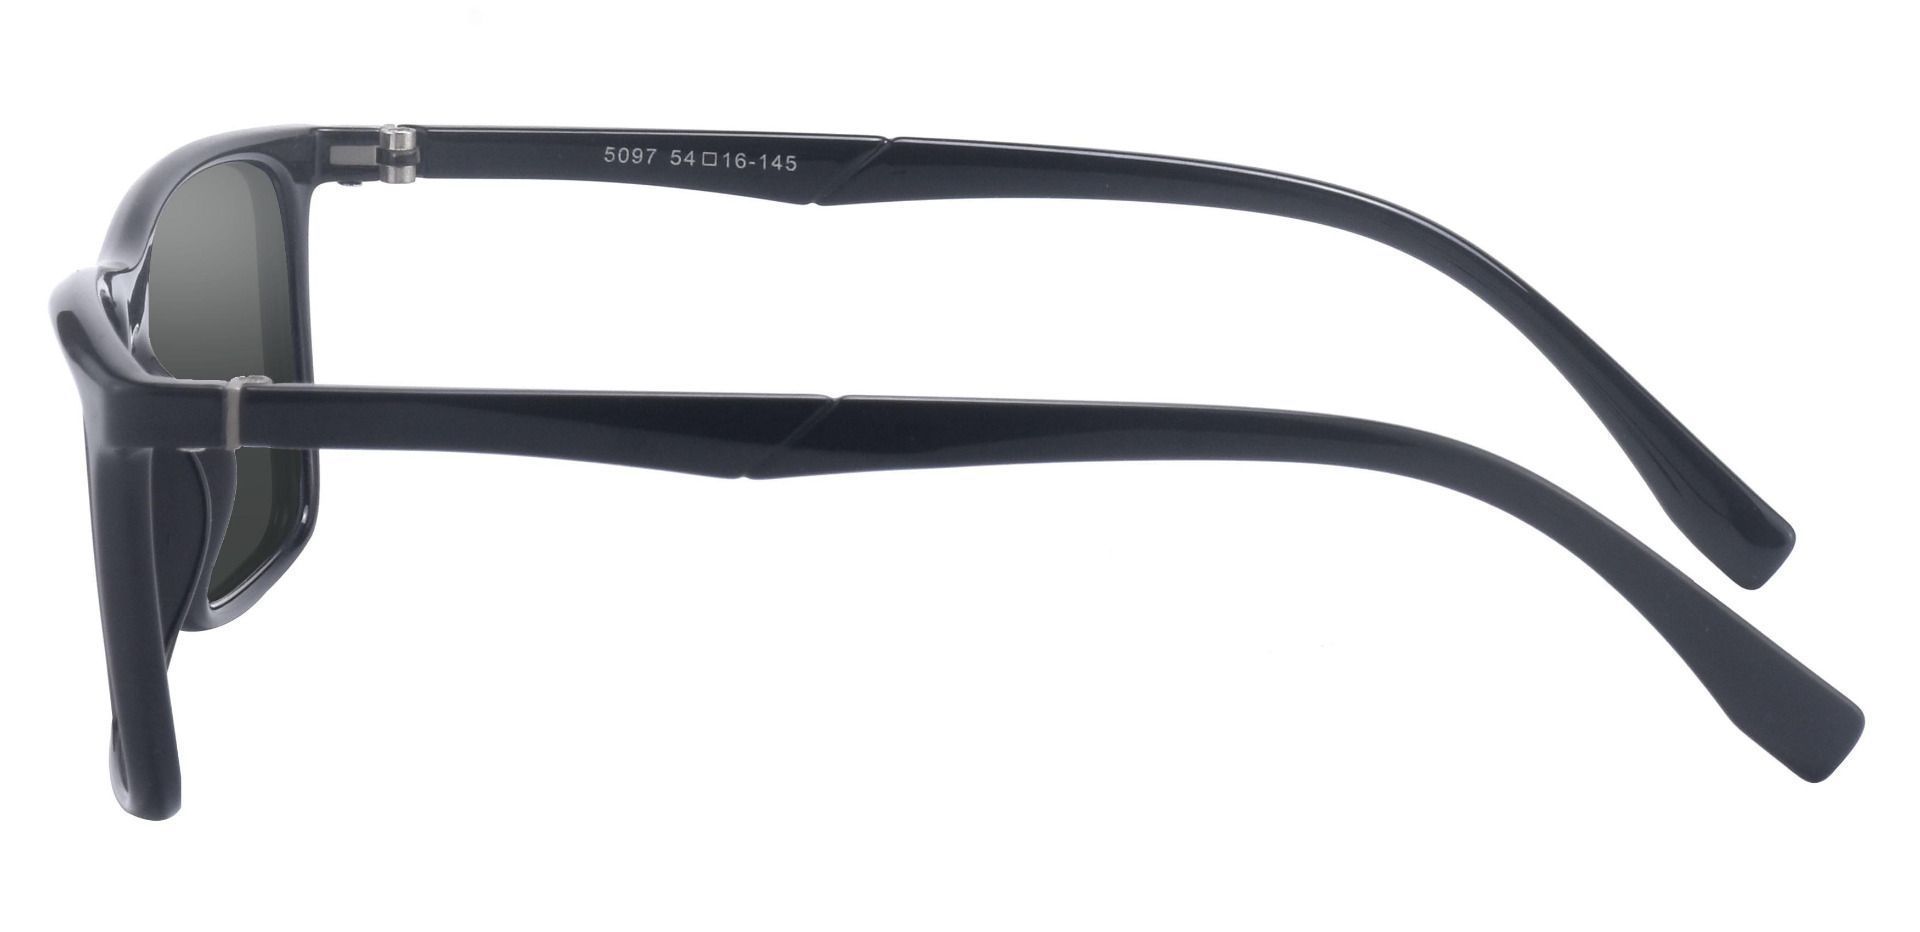 Cleveland Rectangle Prescription Sunglasses - Black Frame With Gray Lenses